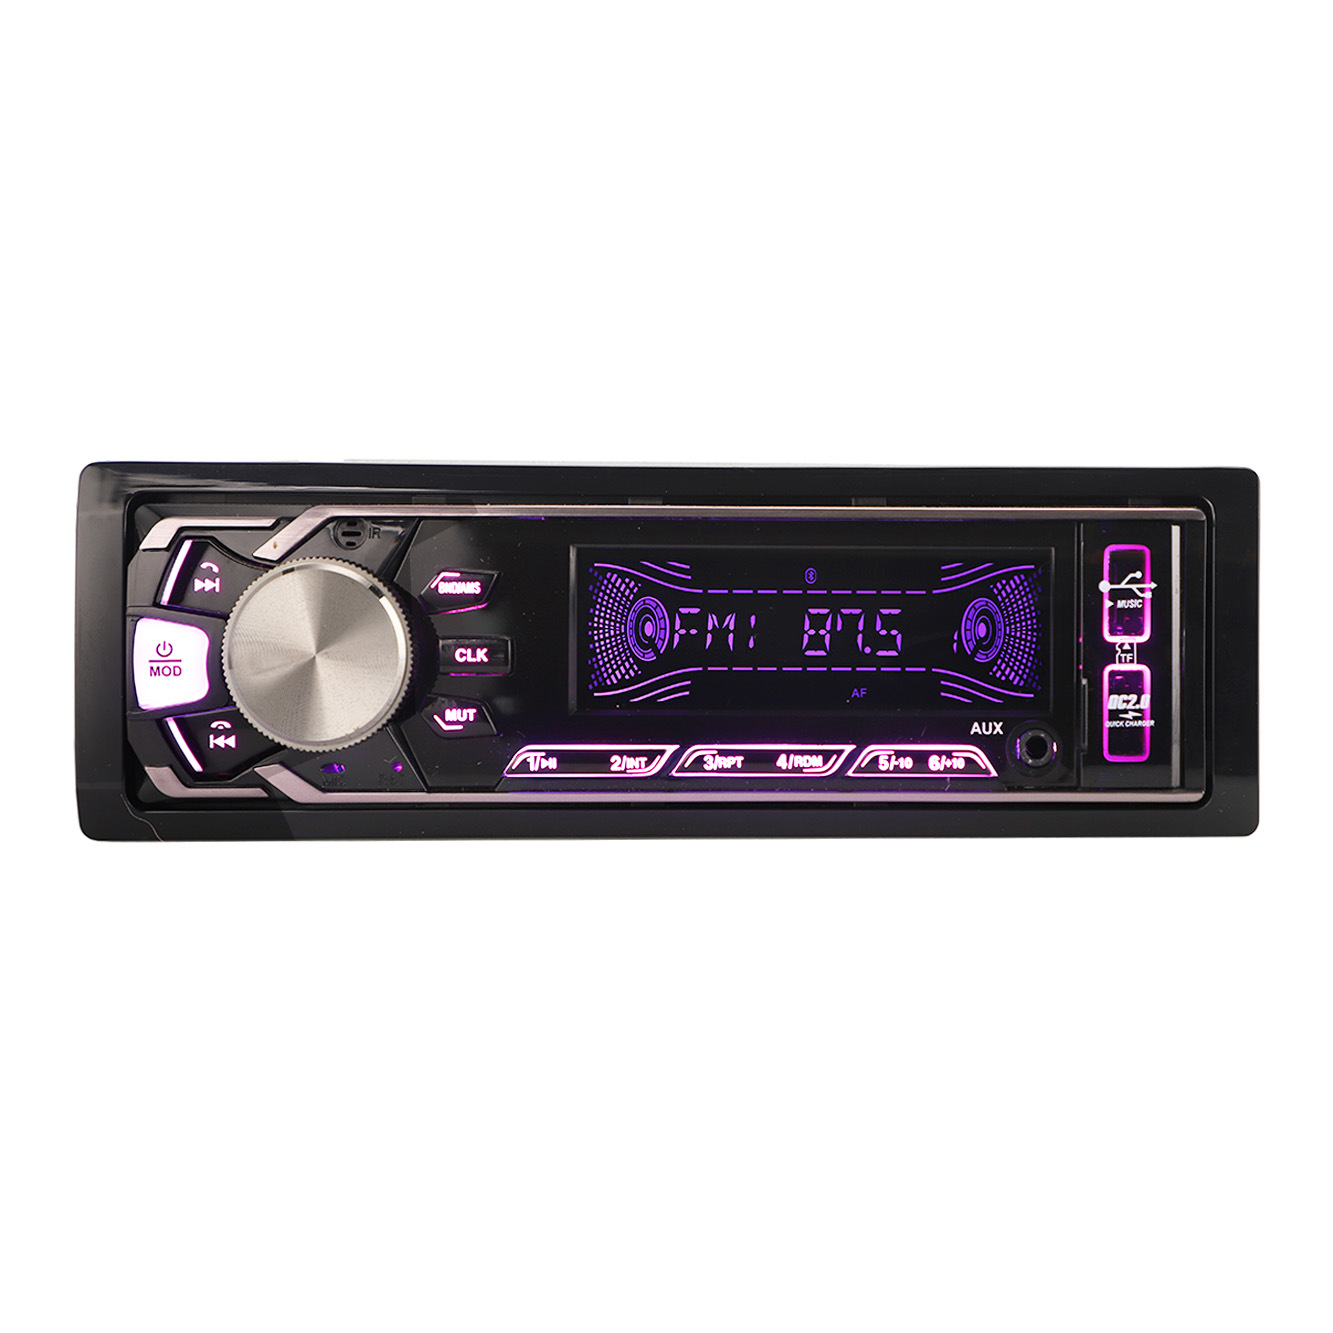 Leitor de MP3 Carregador de carro Leitor de MP3 Leitor de MP3 de painel fixo DIN único para carro